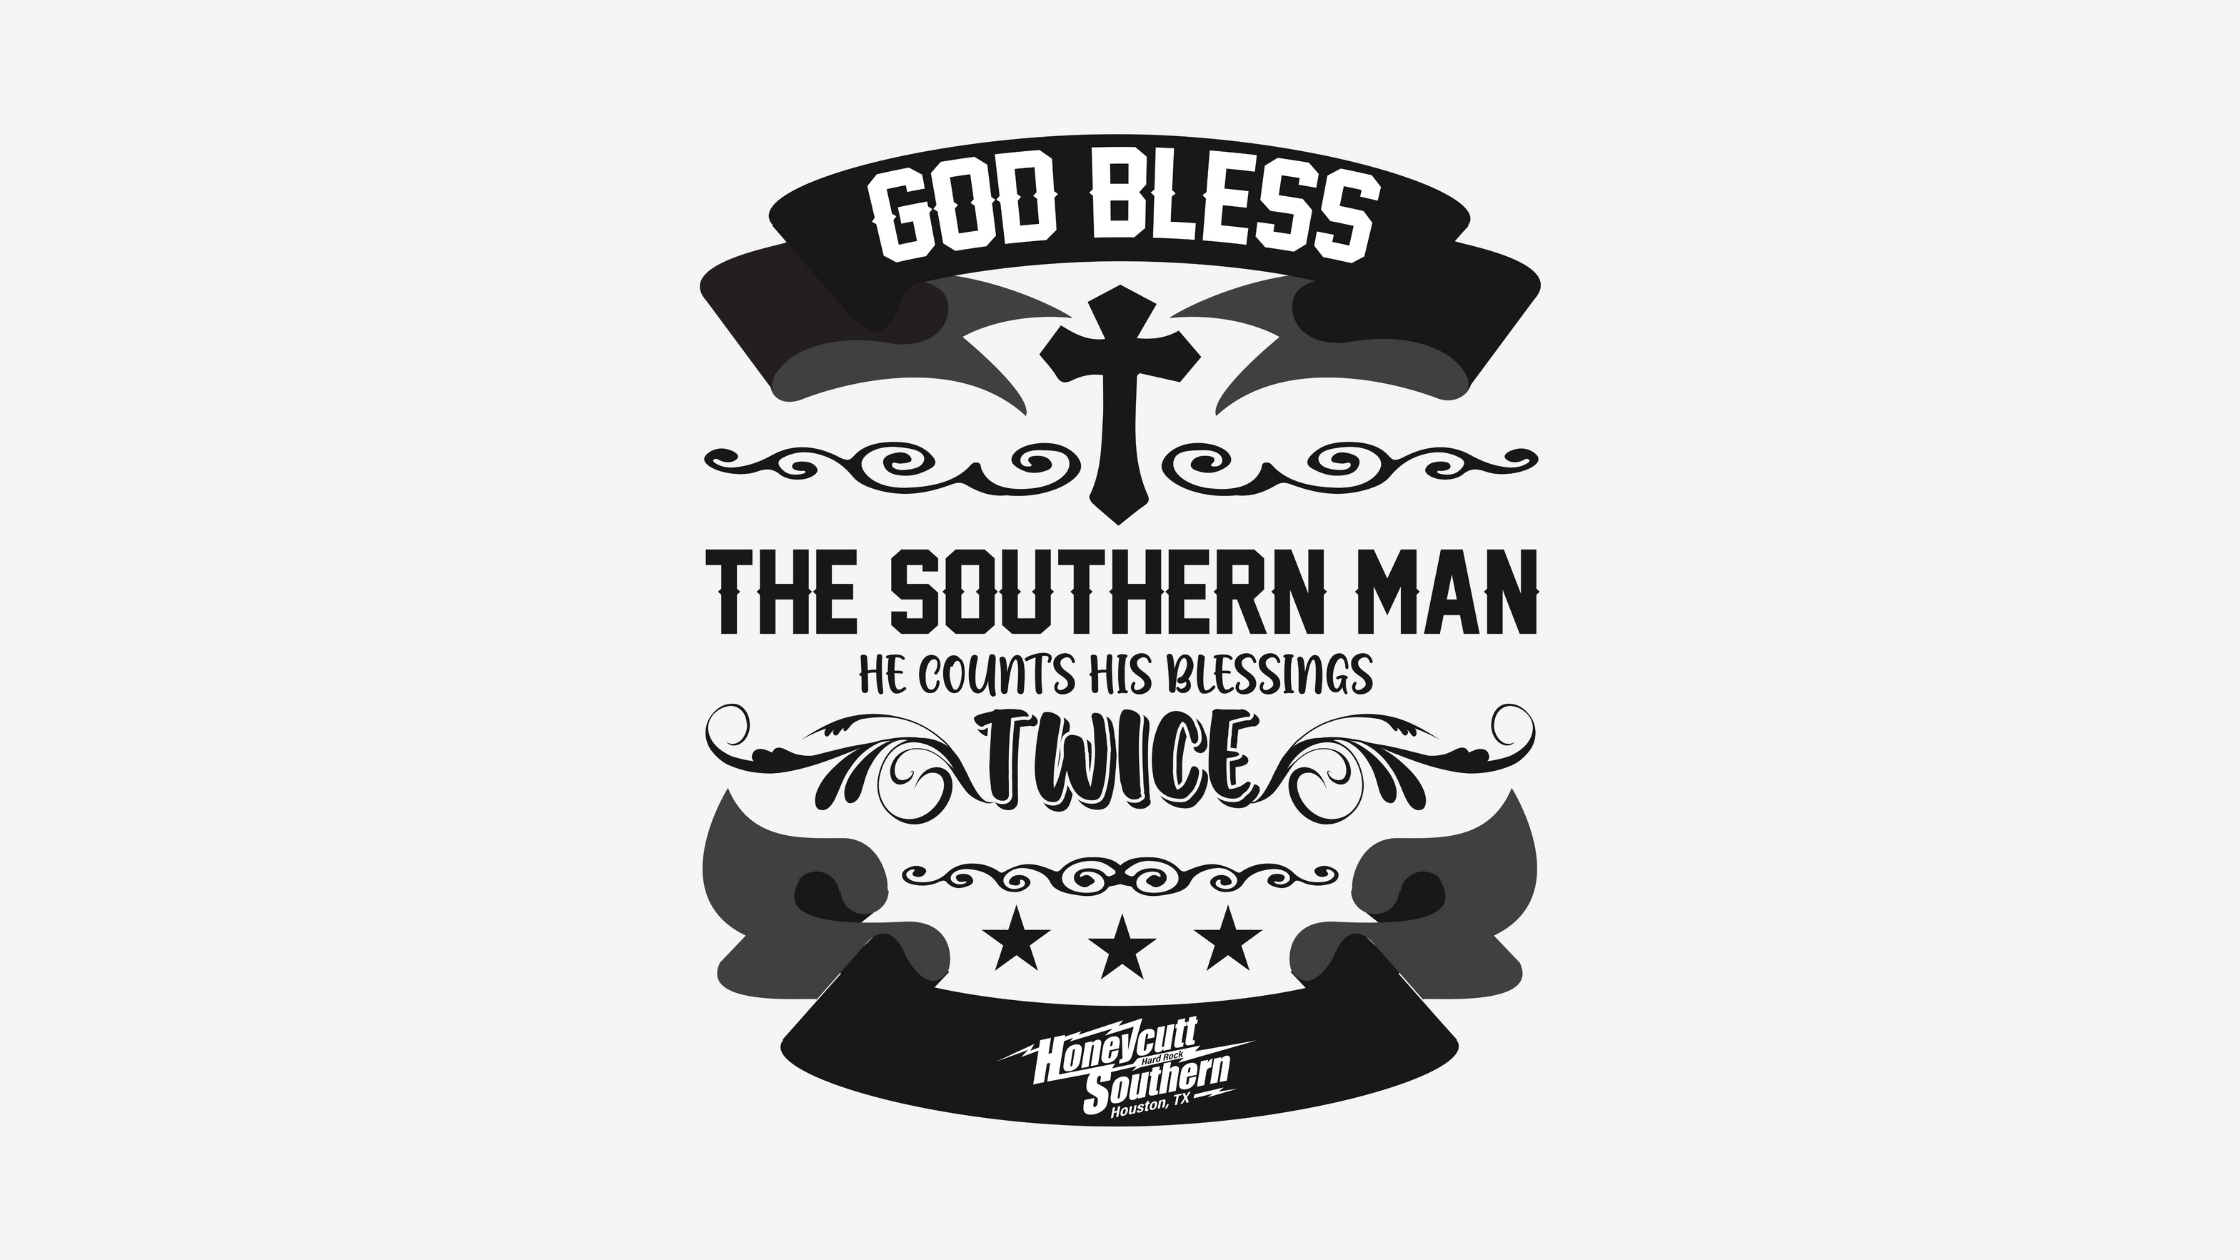 Honeycutt Southern -God Bless the Southern Man Artwork